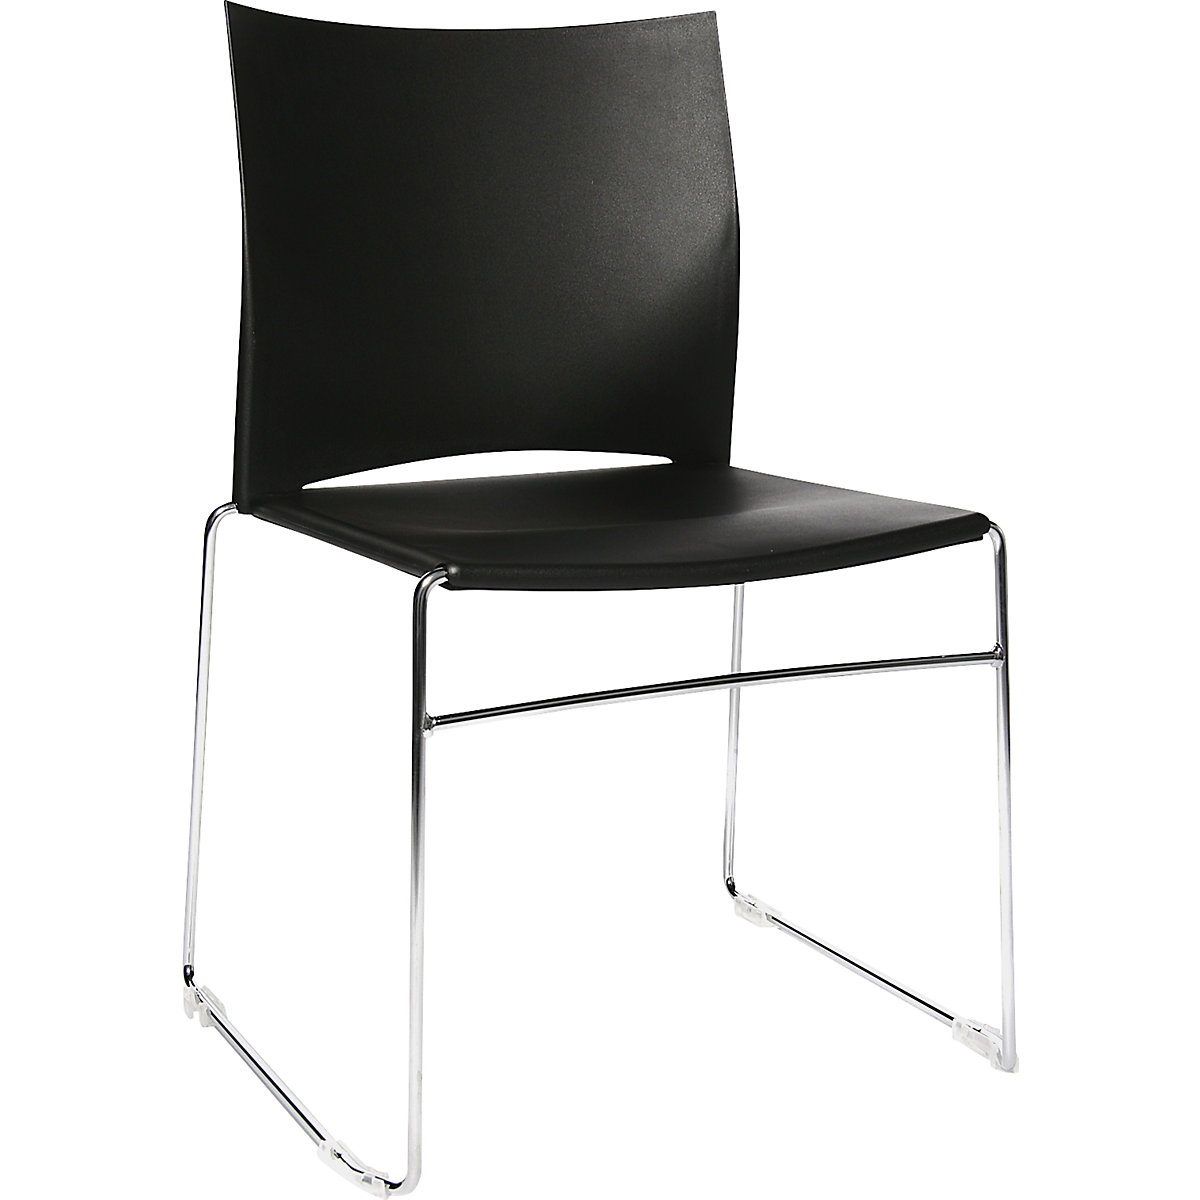 Sled frame stacking chair – Topstar, chrome plated frame, pack of 4, black-6